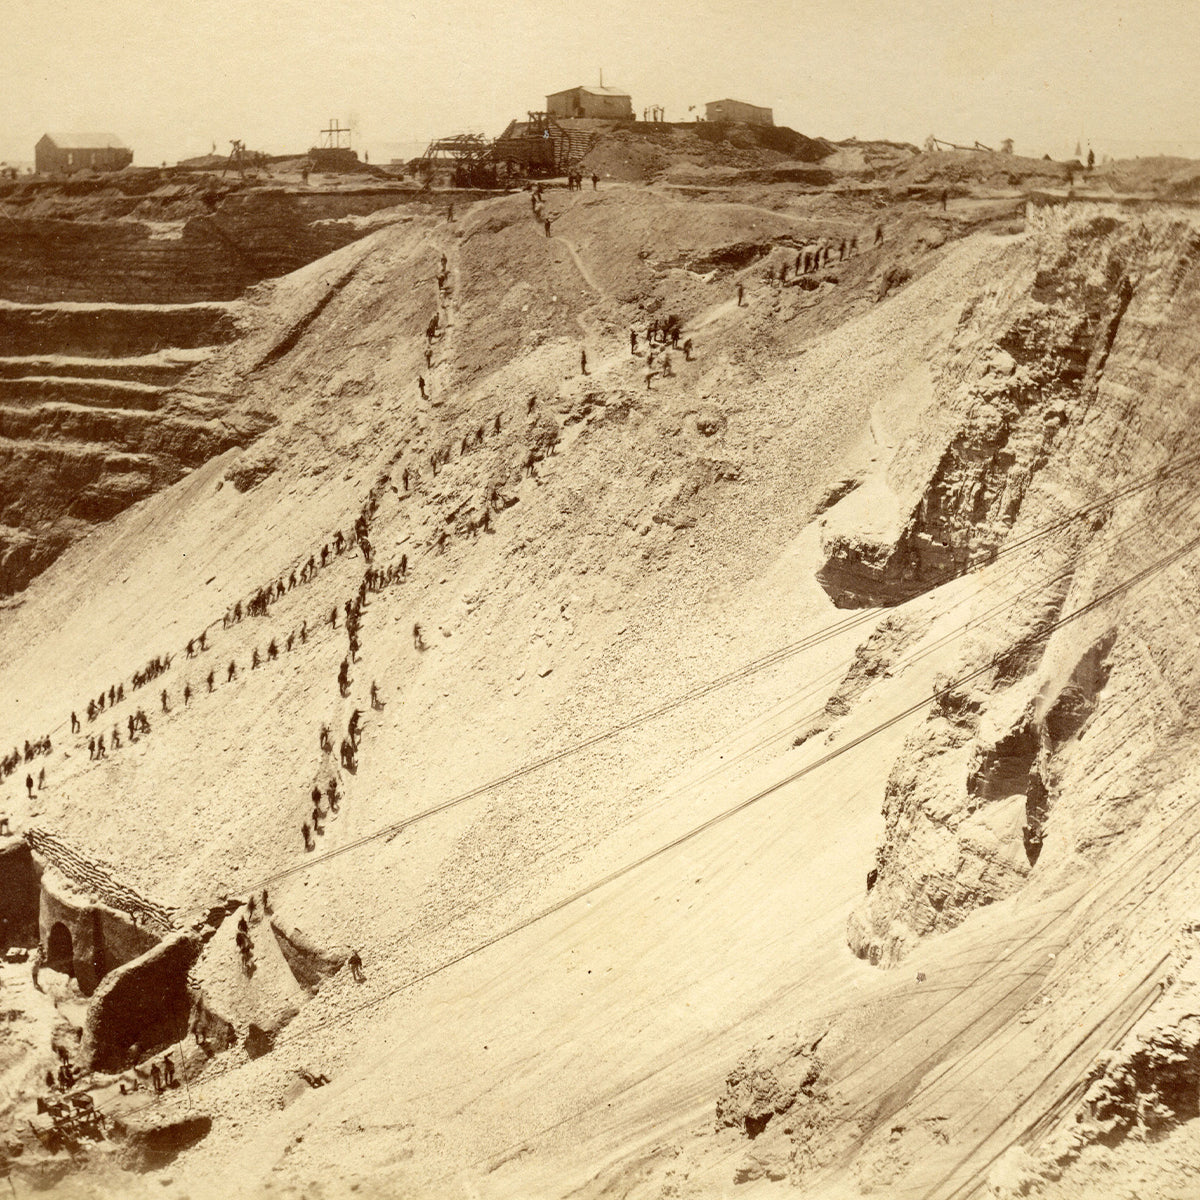 Historical Photograph of Kimberly Mining